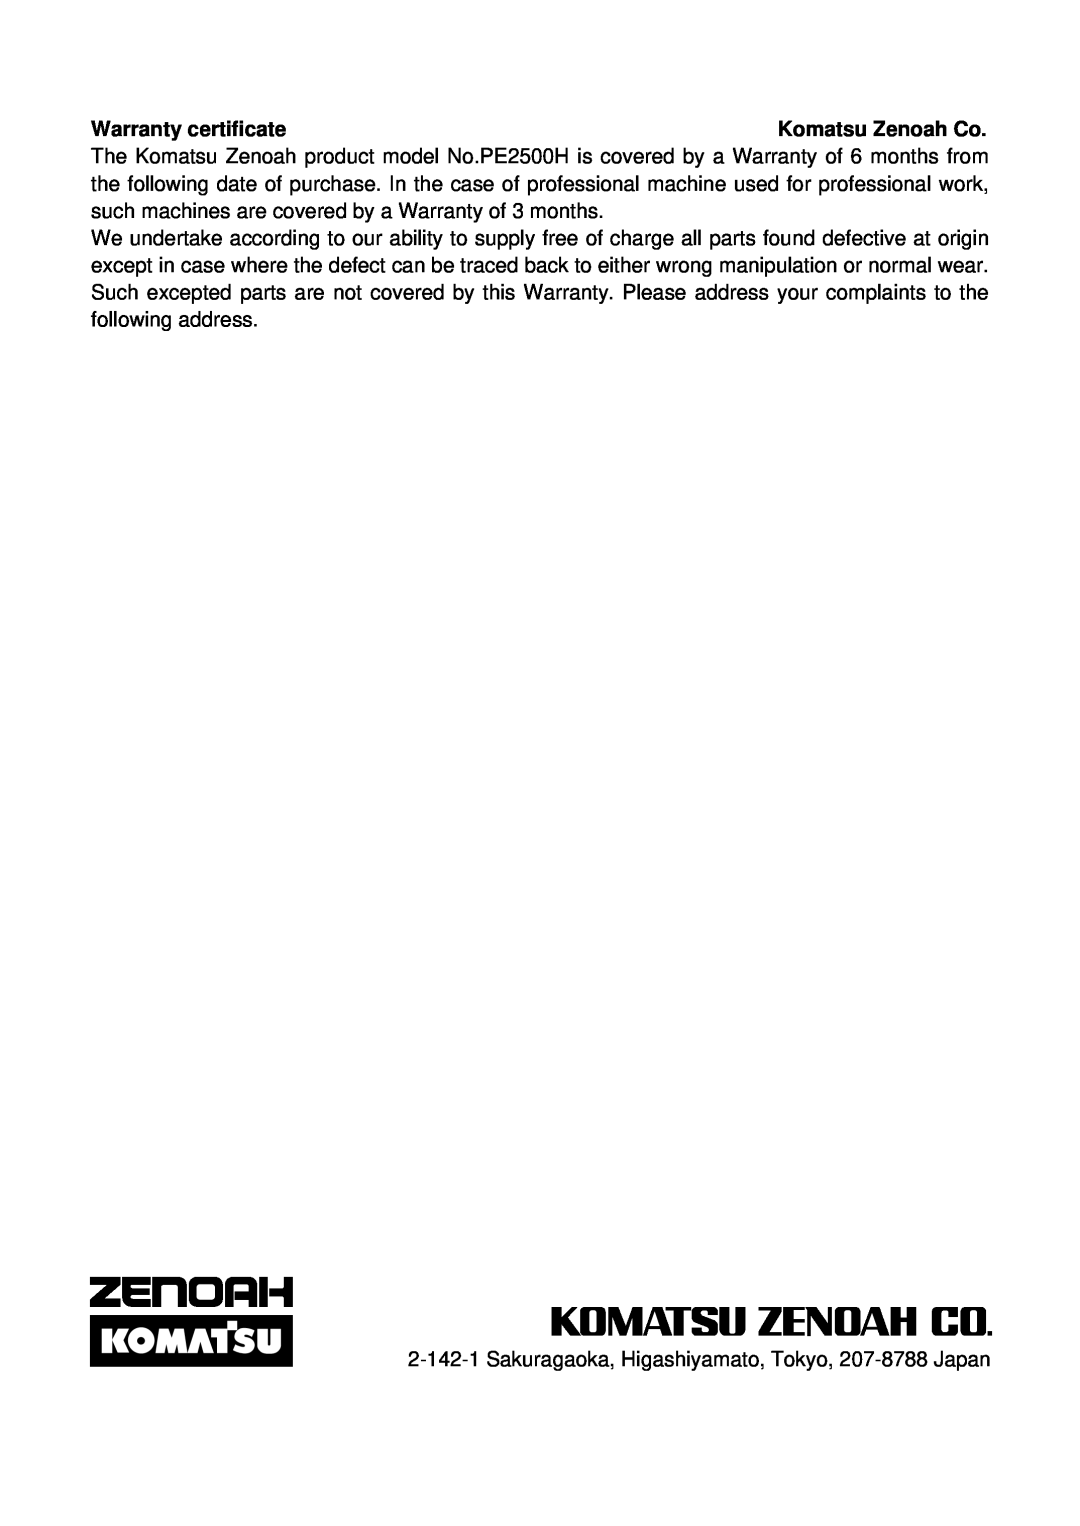 Zenoah PE2500H manual Warranty certificate, Komatsu Zenoah Co 